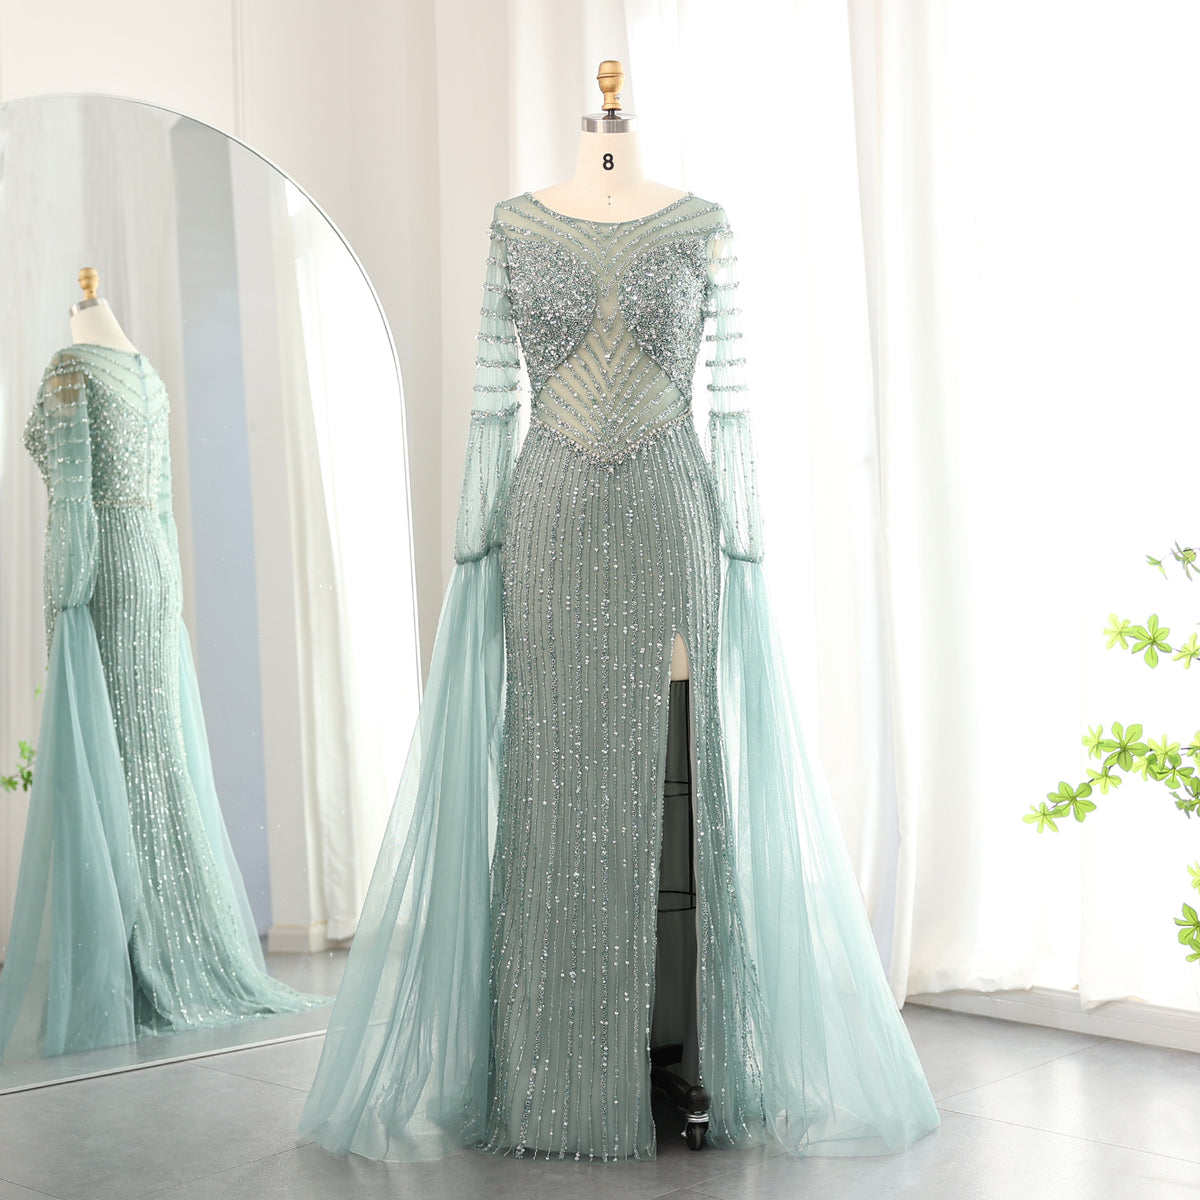 Sharon Said Luxury Dubai Mermaid Sage Green Evening Dress with Cape Sleeves Slit Elegant Lilac Women Wedding Party Gowns SS178